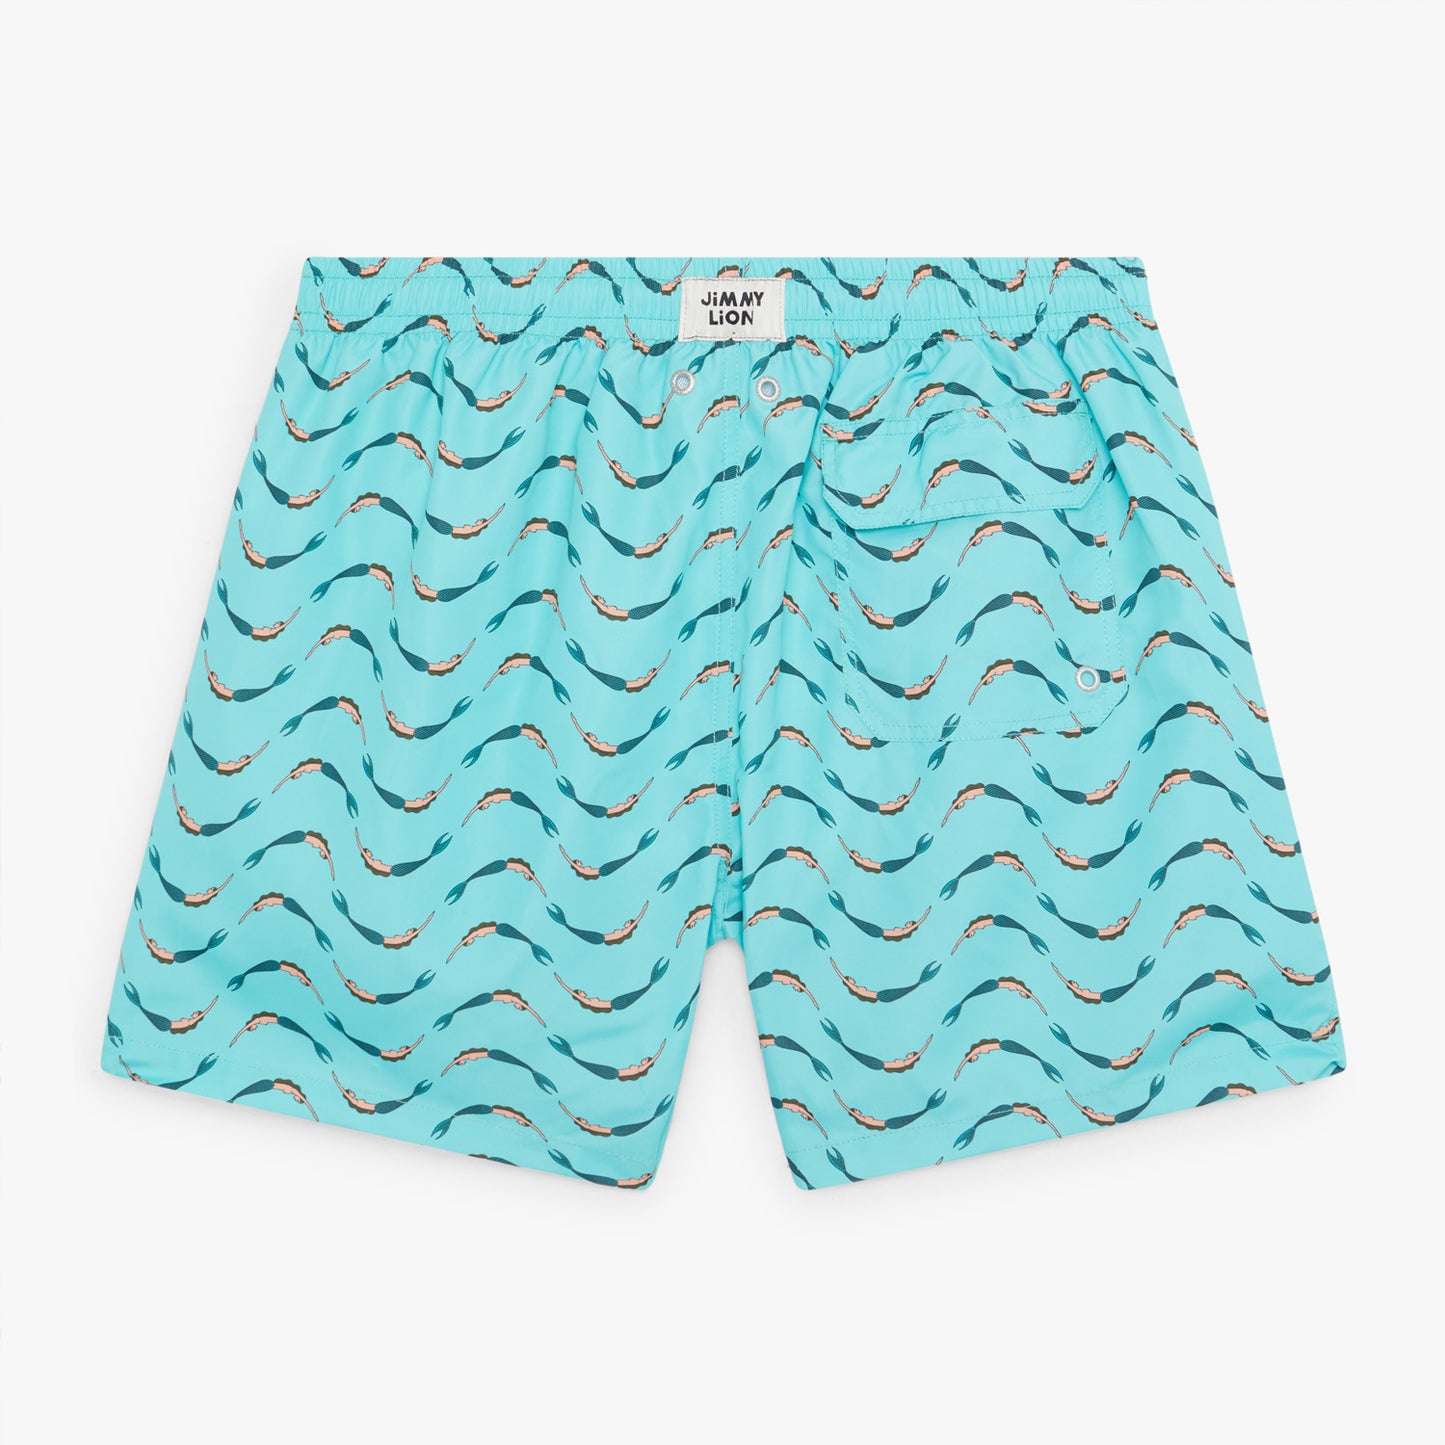 Mermaids Swim Shorts - Turquoise (1)